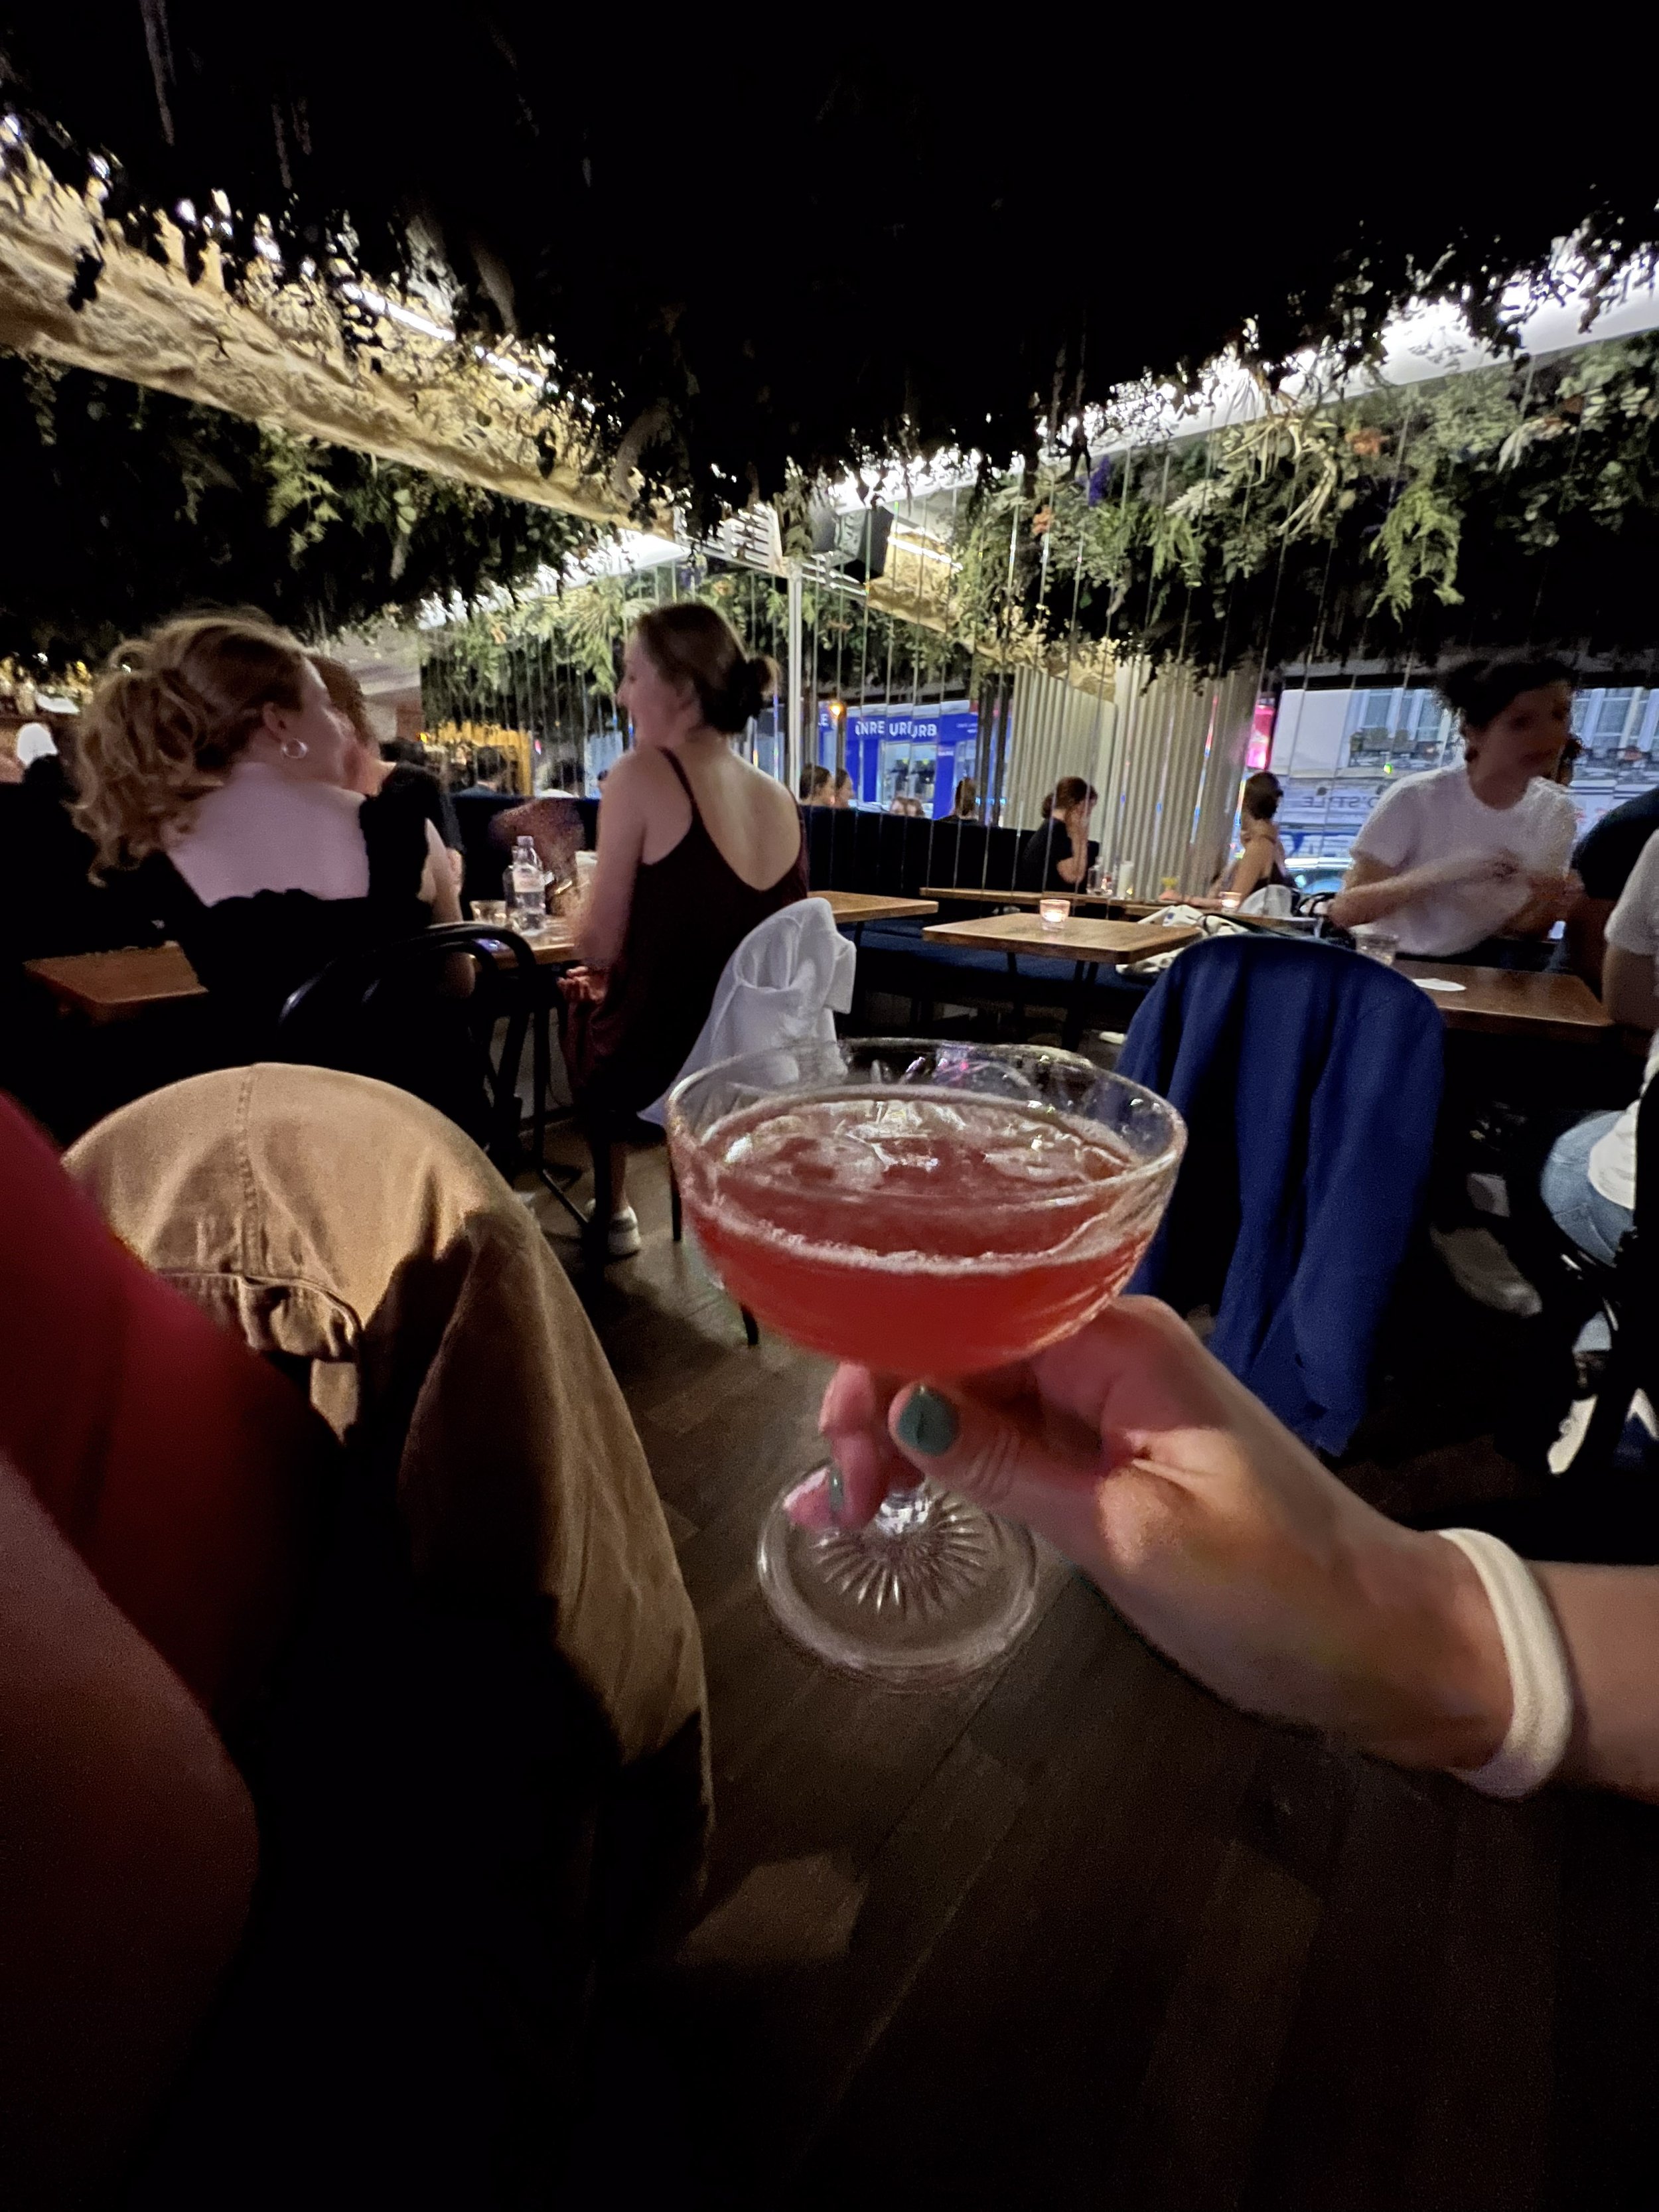  cocktail at combat cocktail bar in paris   